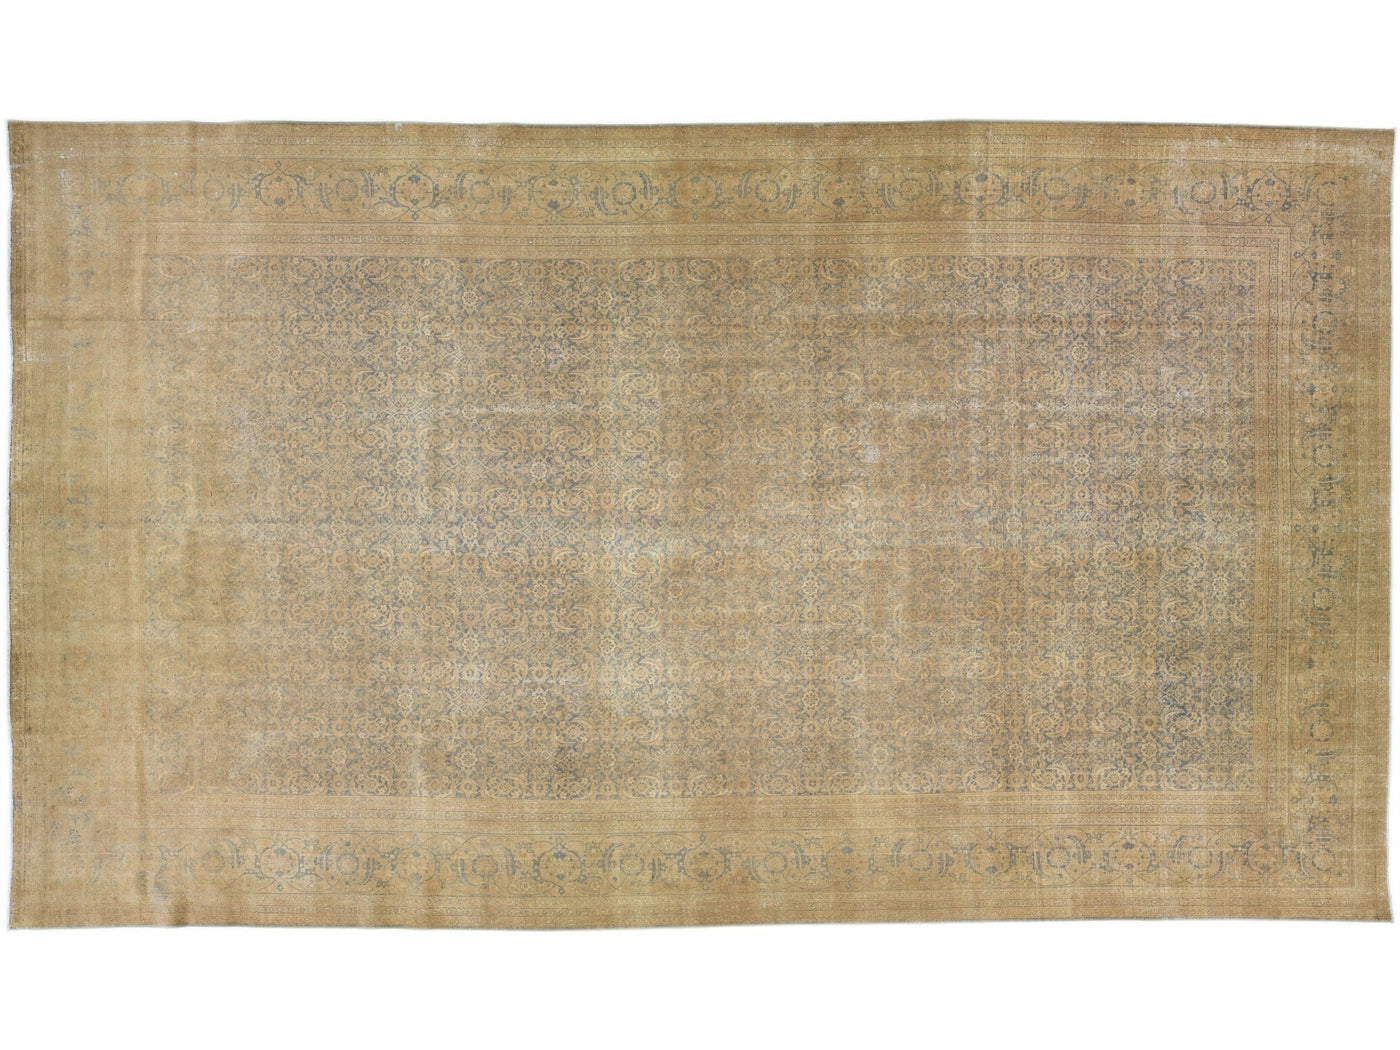 Antique Tabriz Handmade Persian Tan Oversize Wool Rug With Shah Abbasi Motif